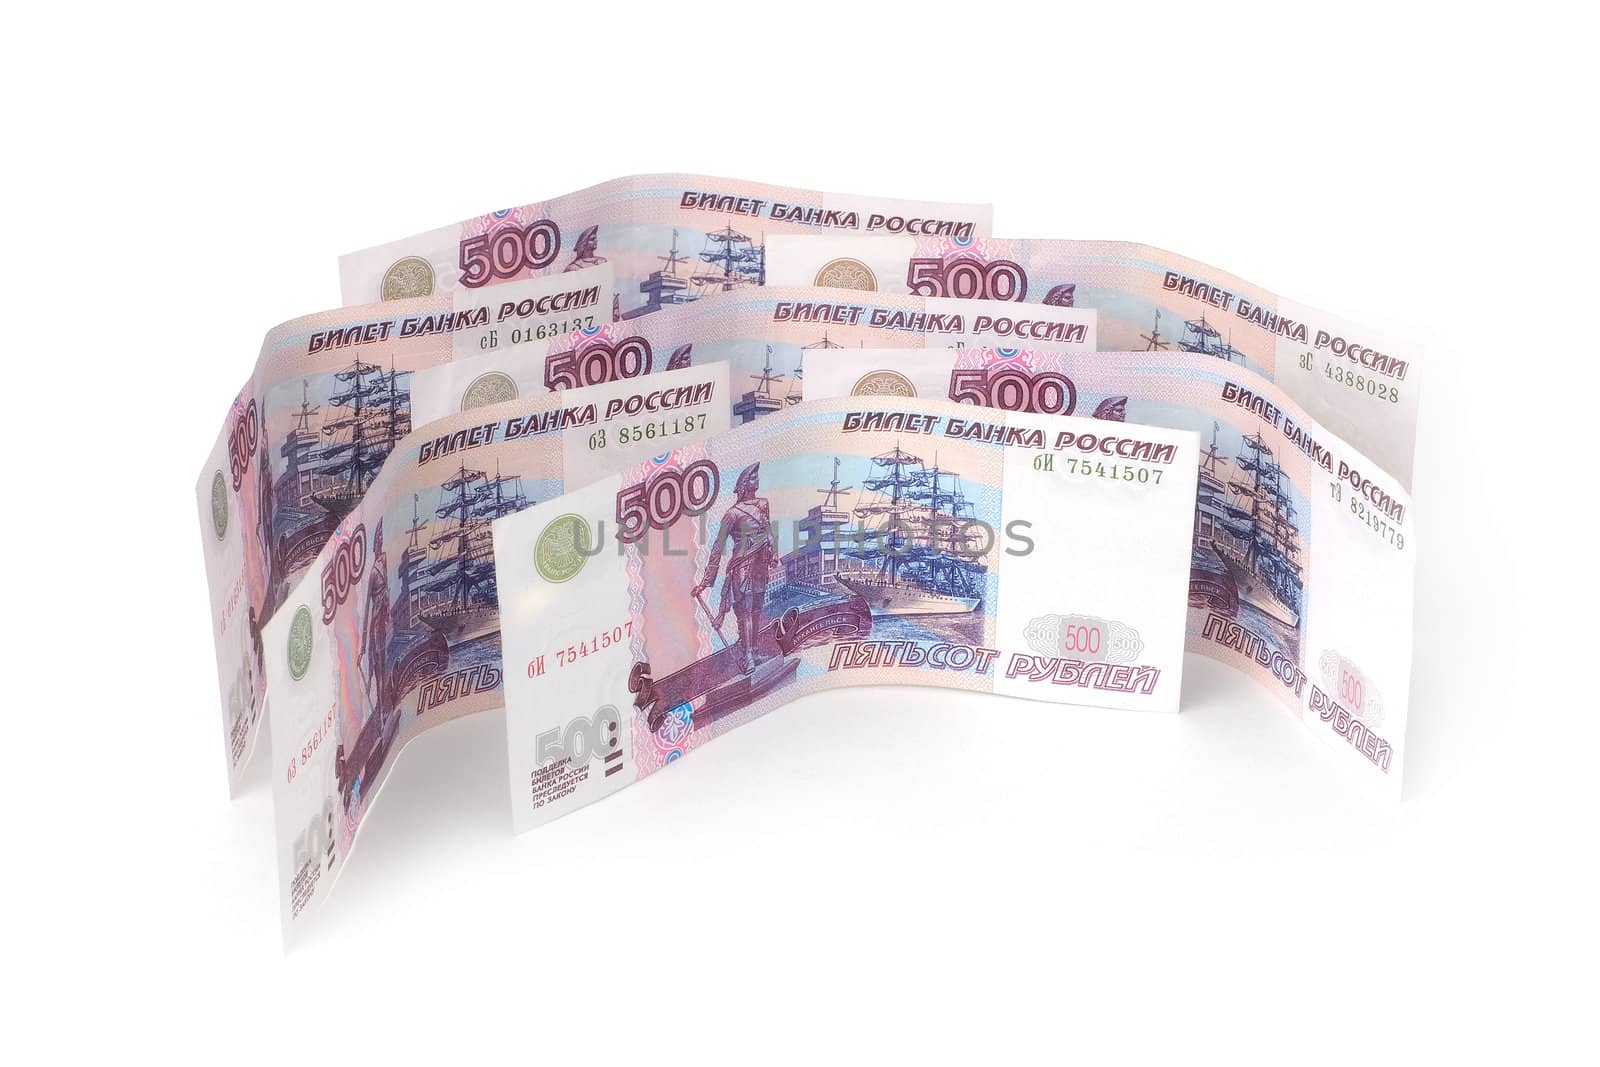 The Russian Money by maxkrasnov